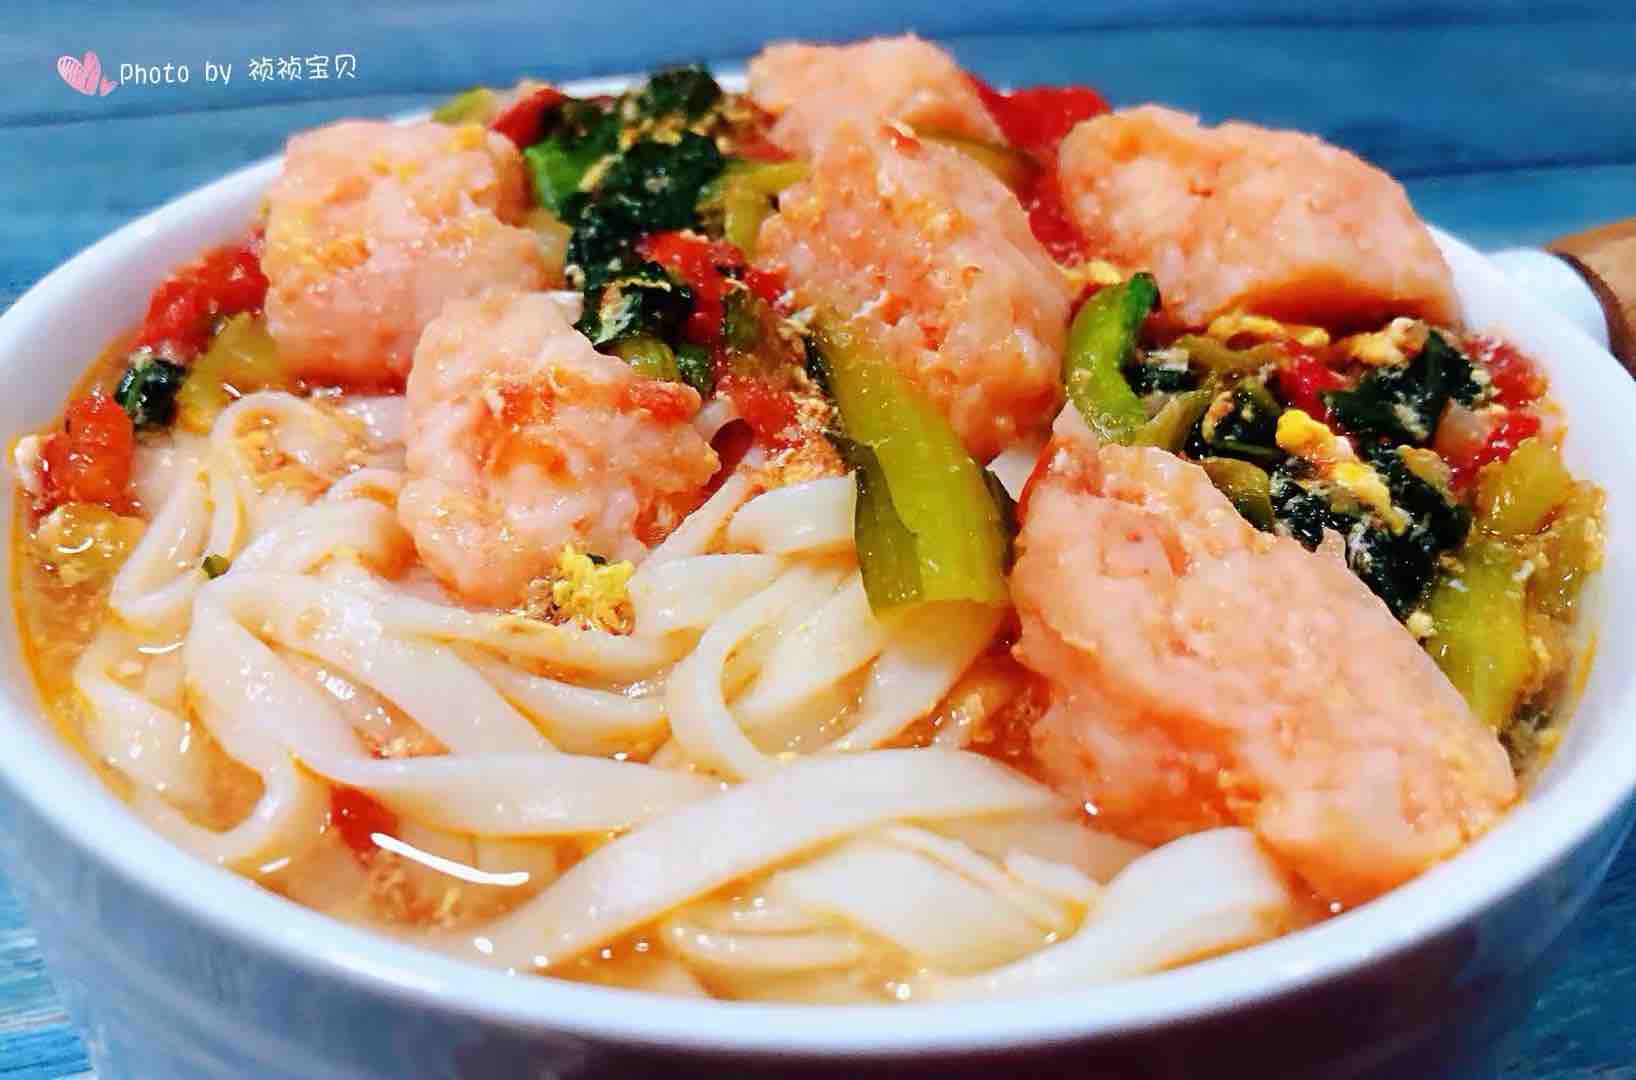 Shrimp and Egg Noodles with Vegetables recipe